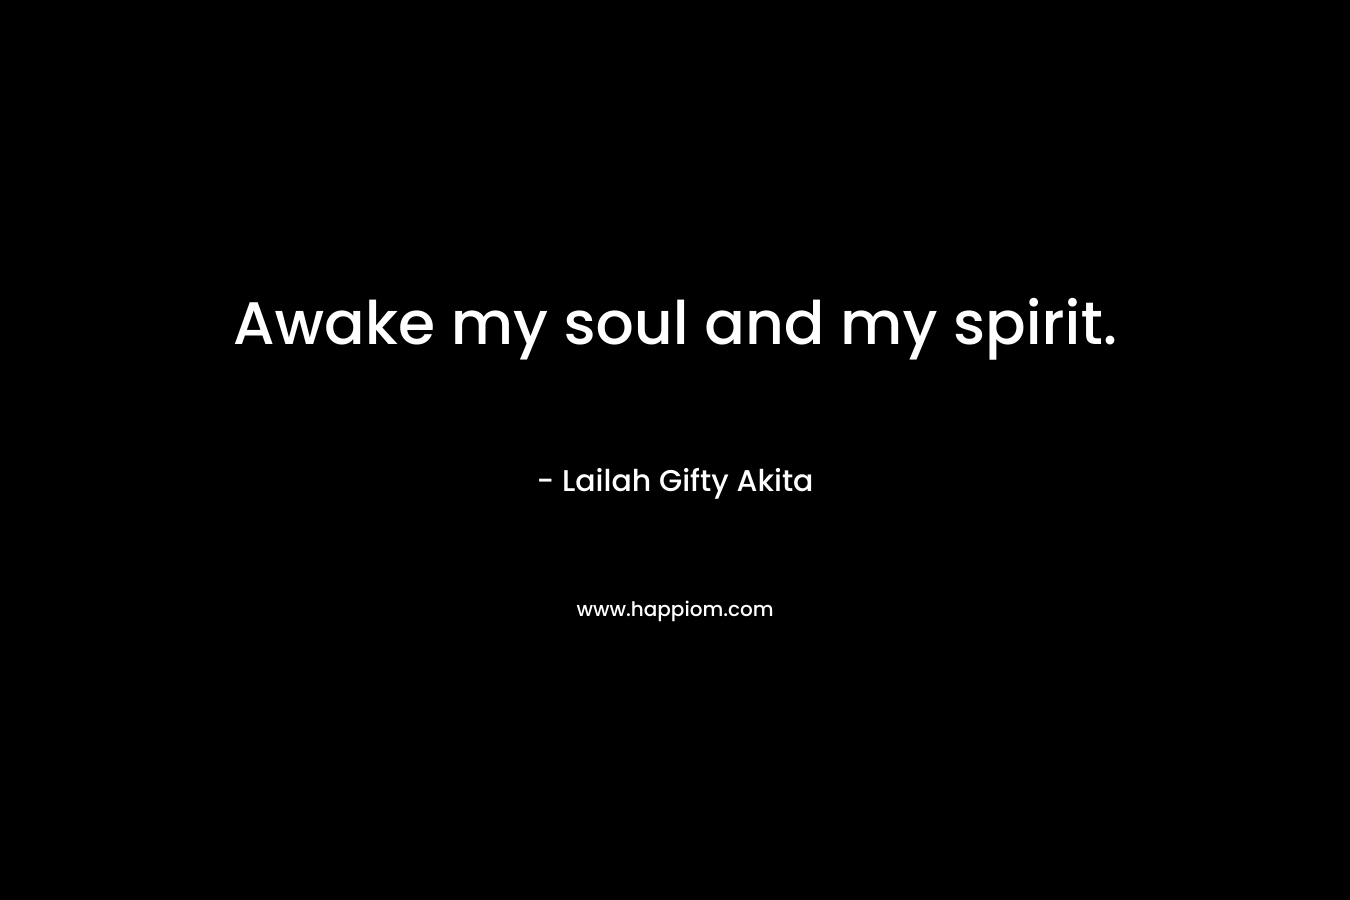 Awake my soul and my spirit.